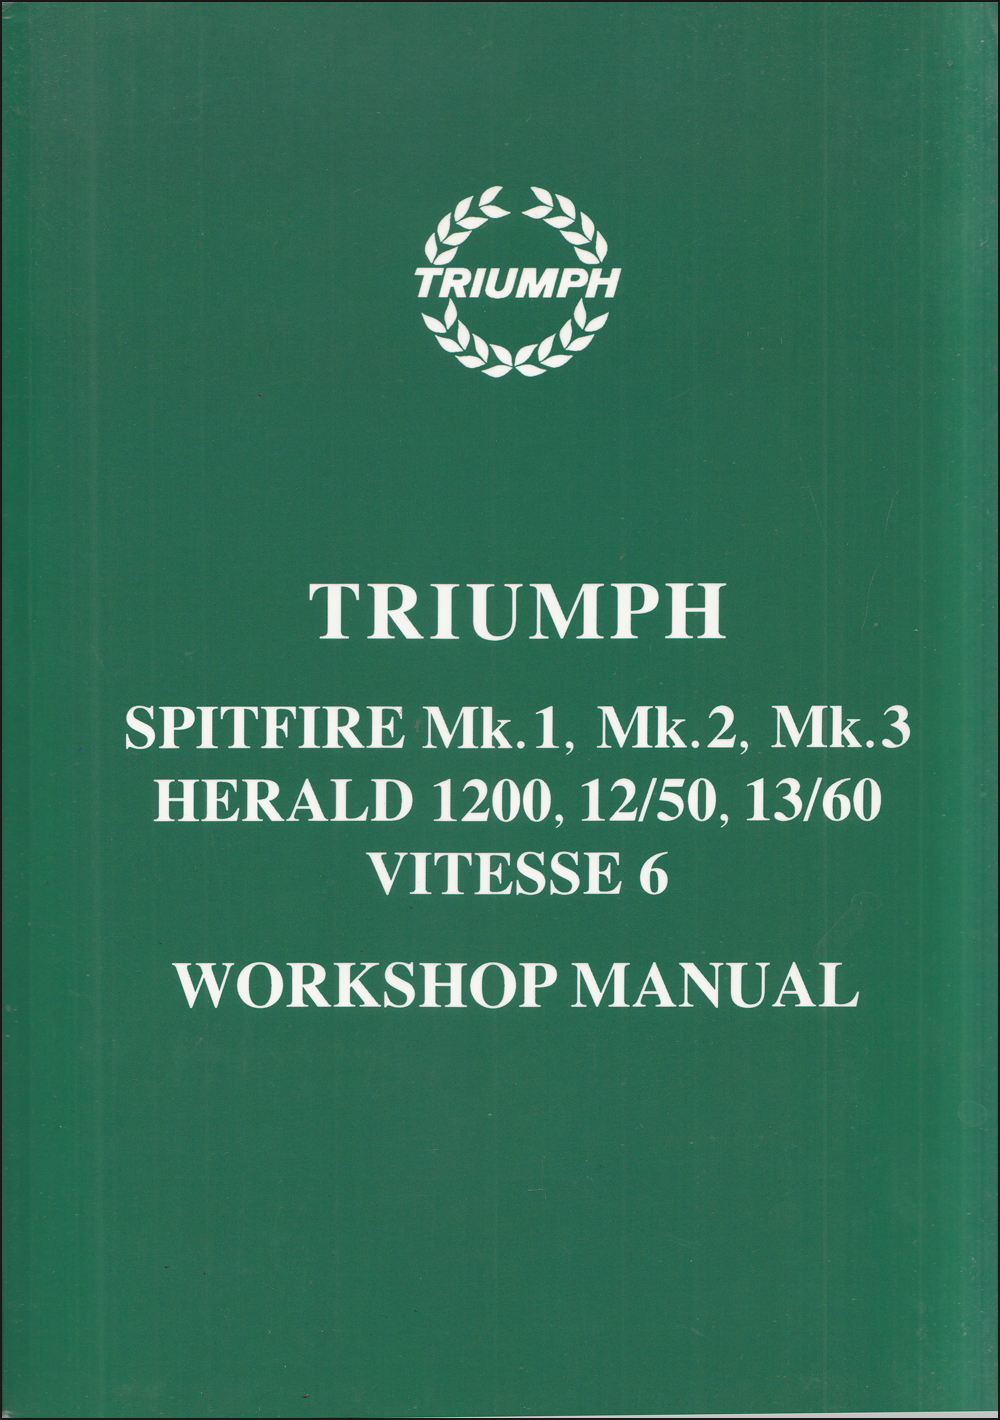 1960-1970 Triumph Spitfire and Herald Repair Shop Manual Reprint